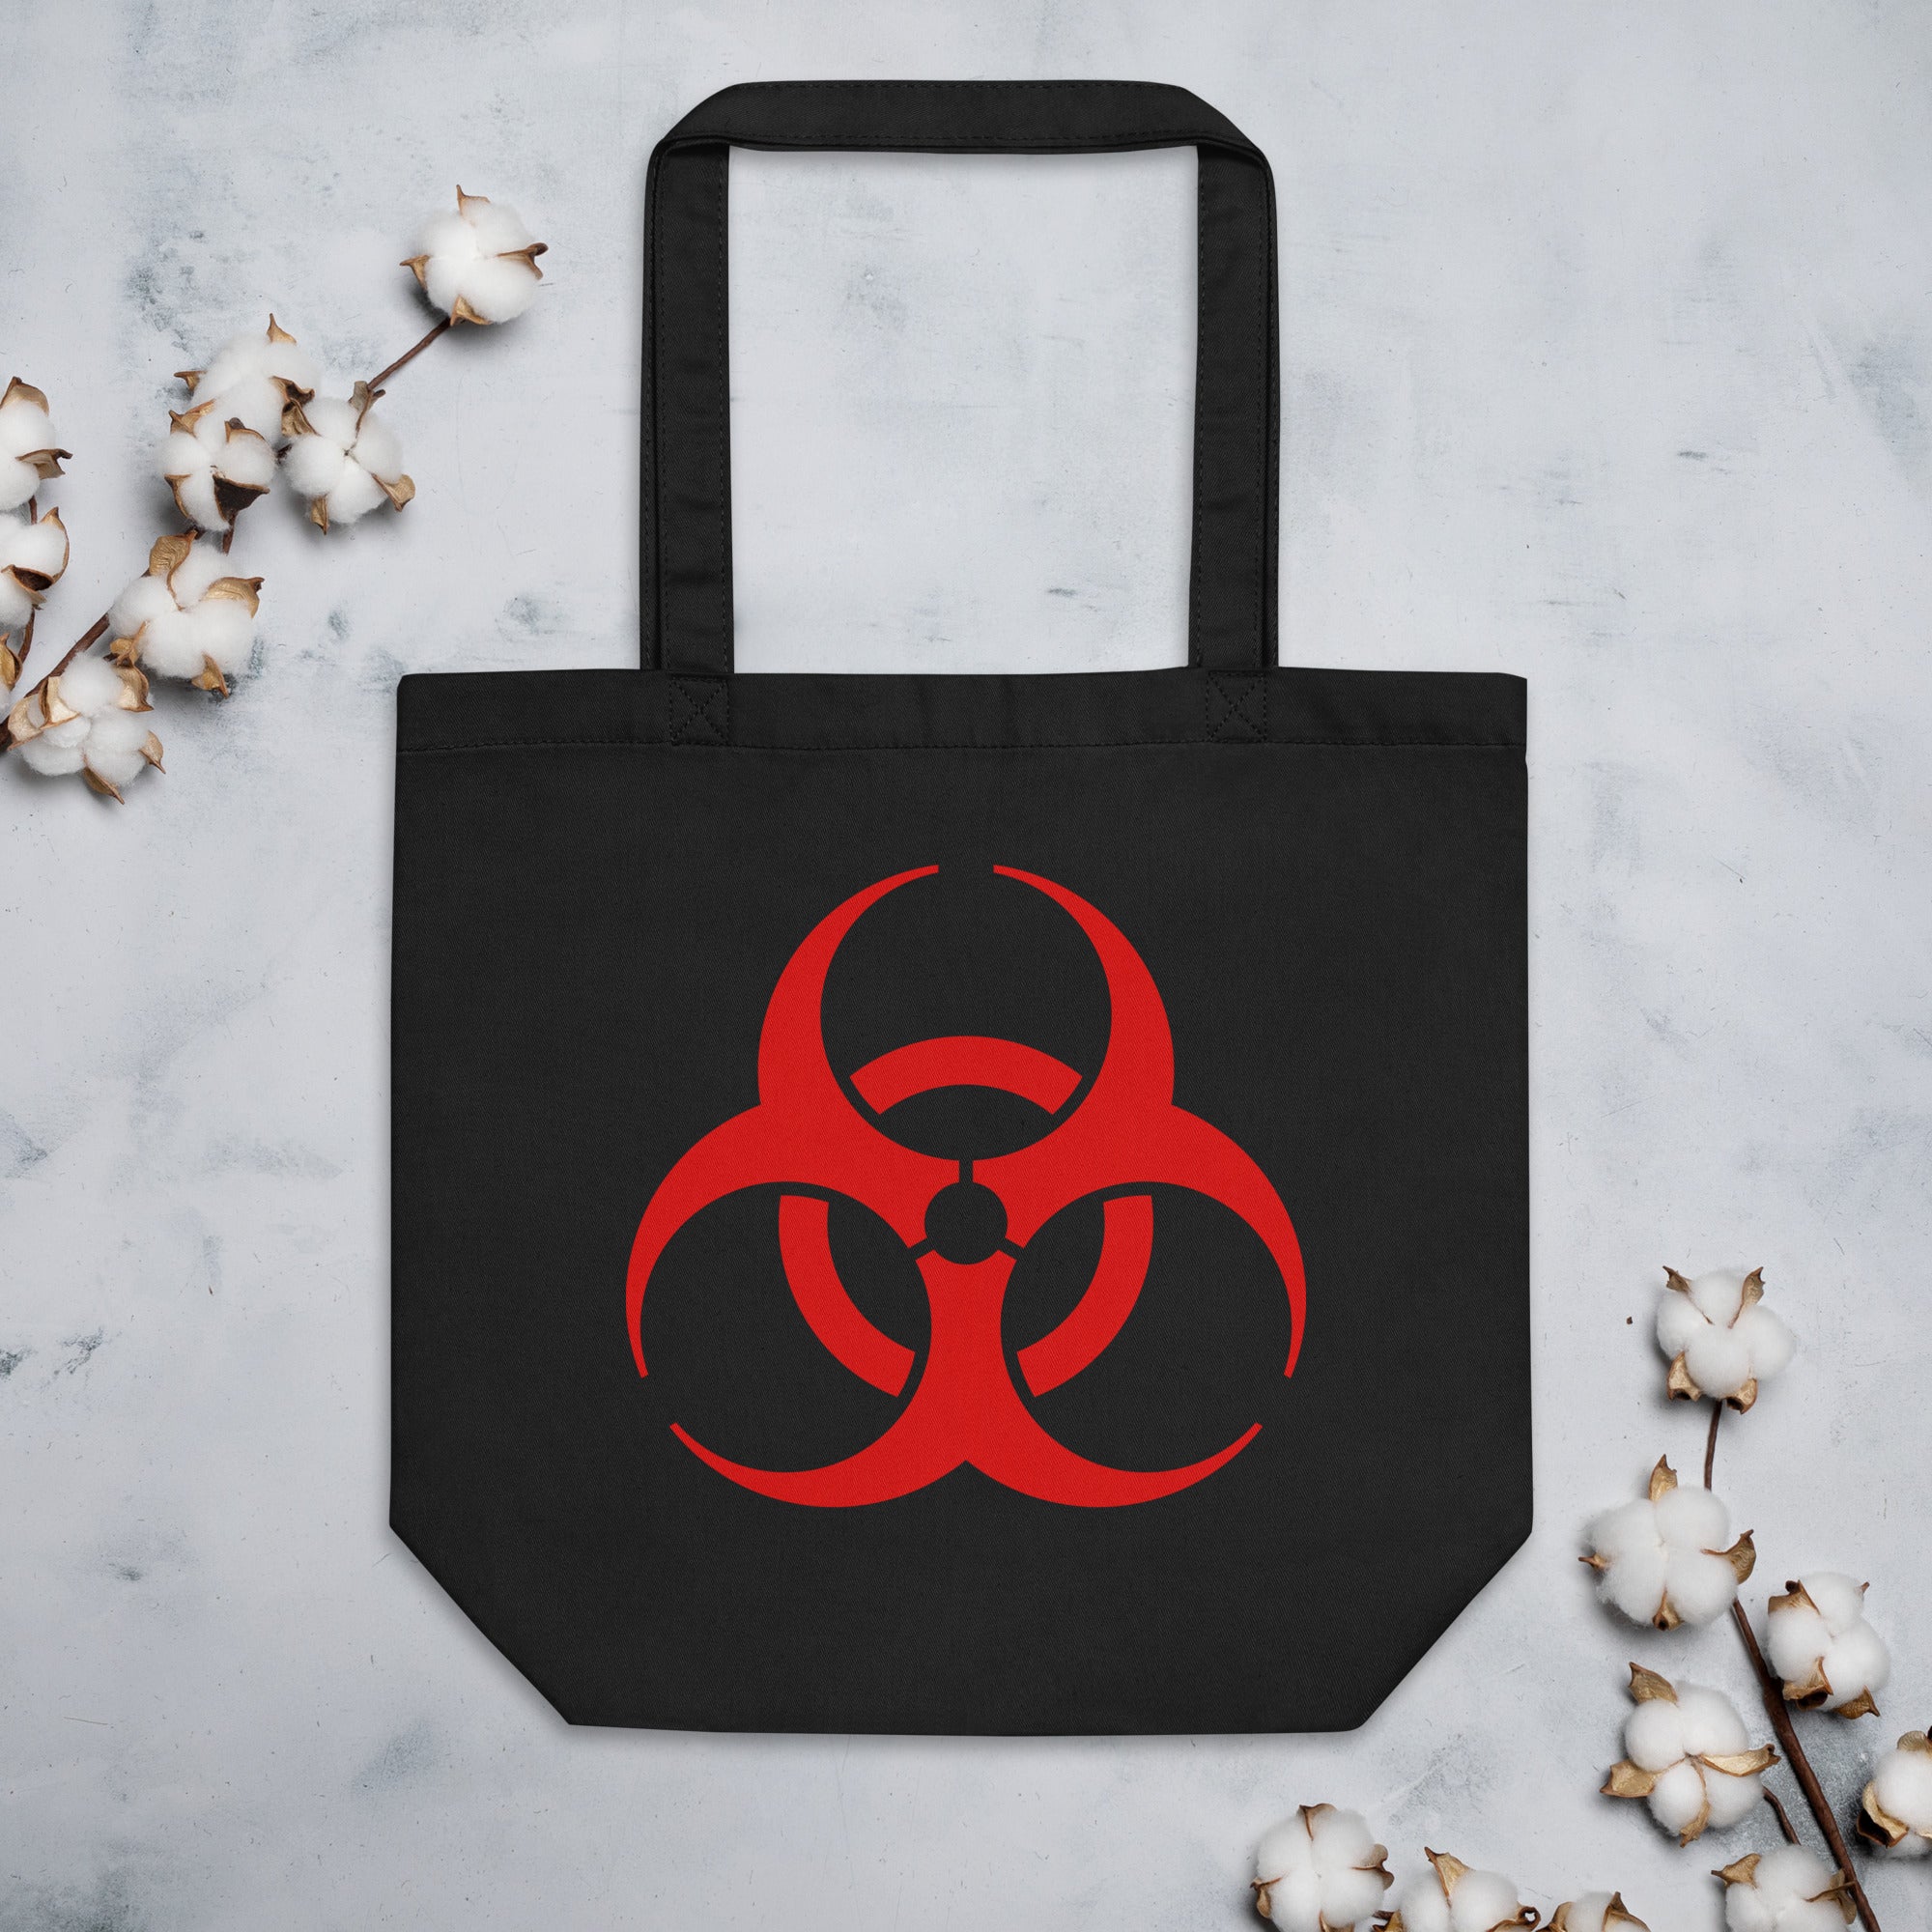 Red Bio Hazard Symbol Warning Sign Eco Tote Bag - Edge of Life Designs